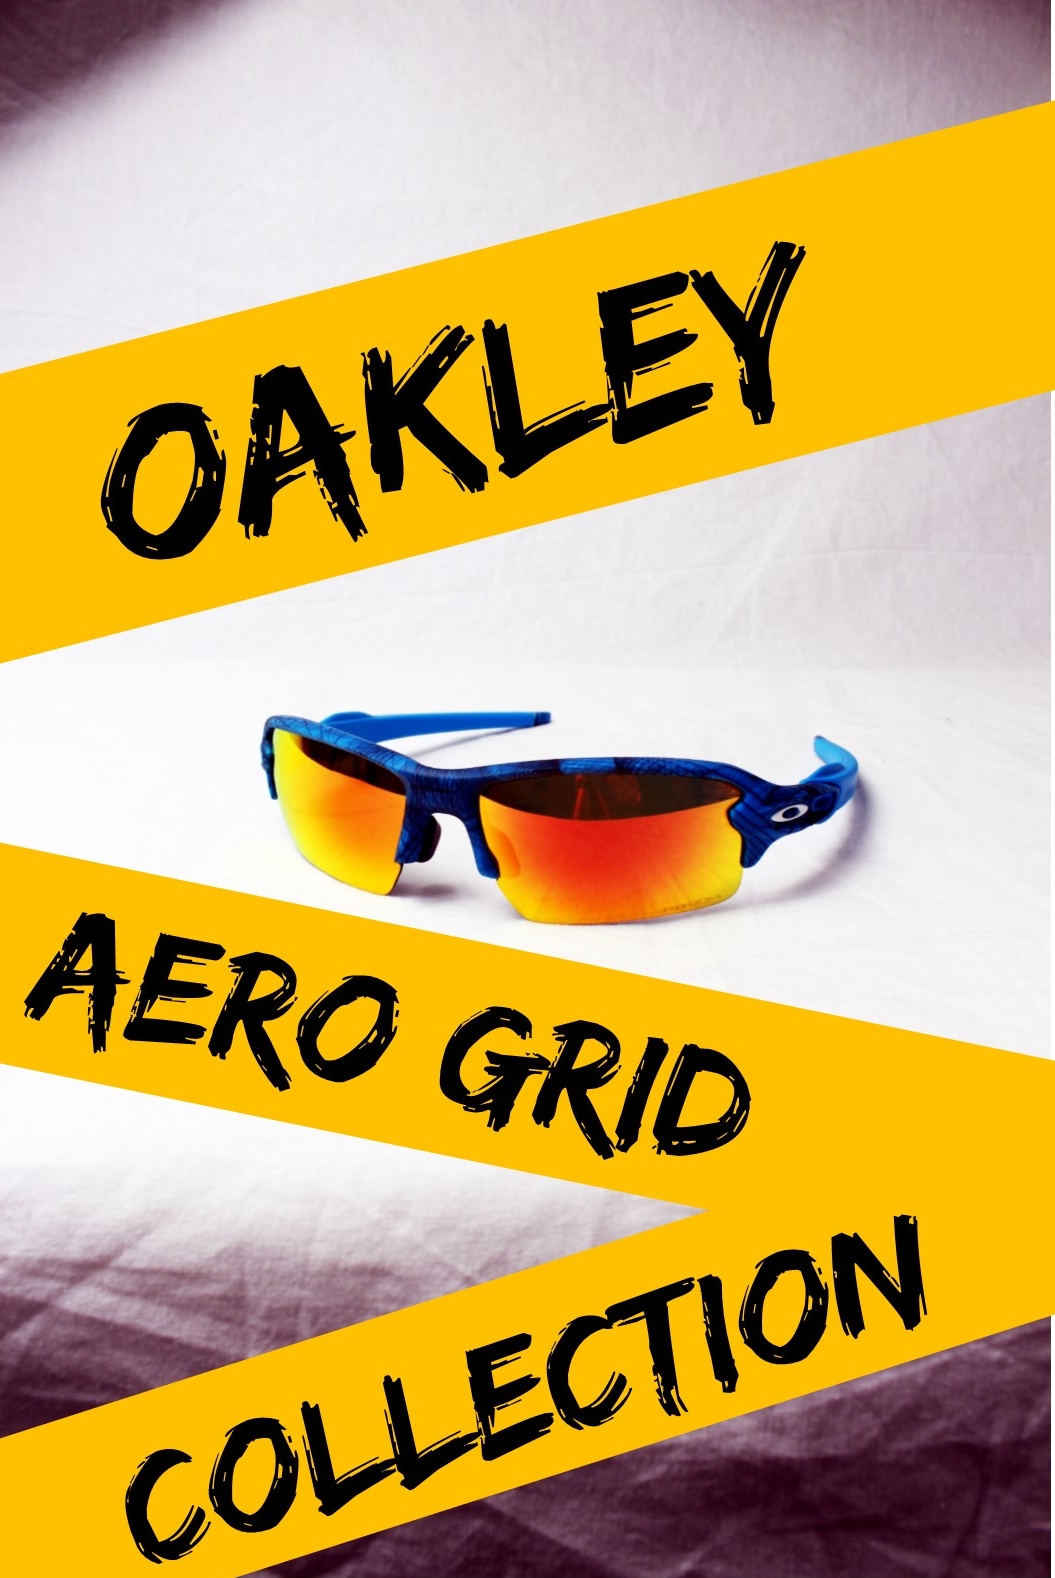 aero grid collection